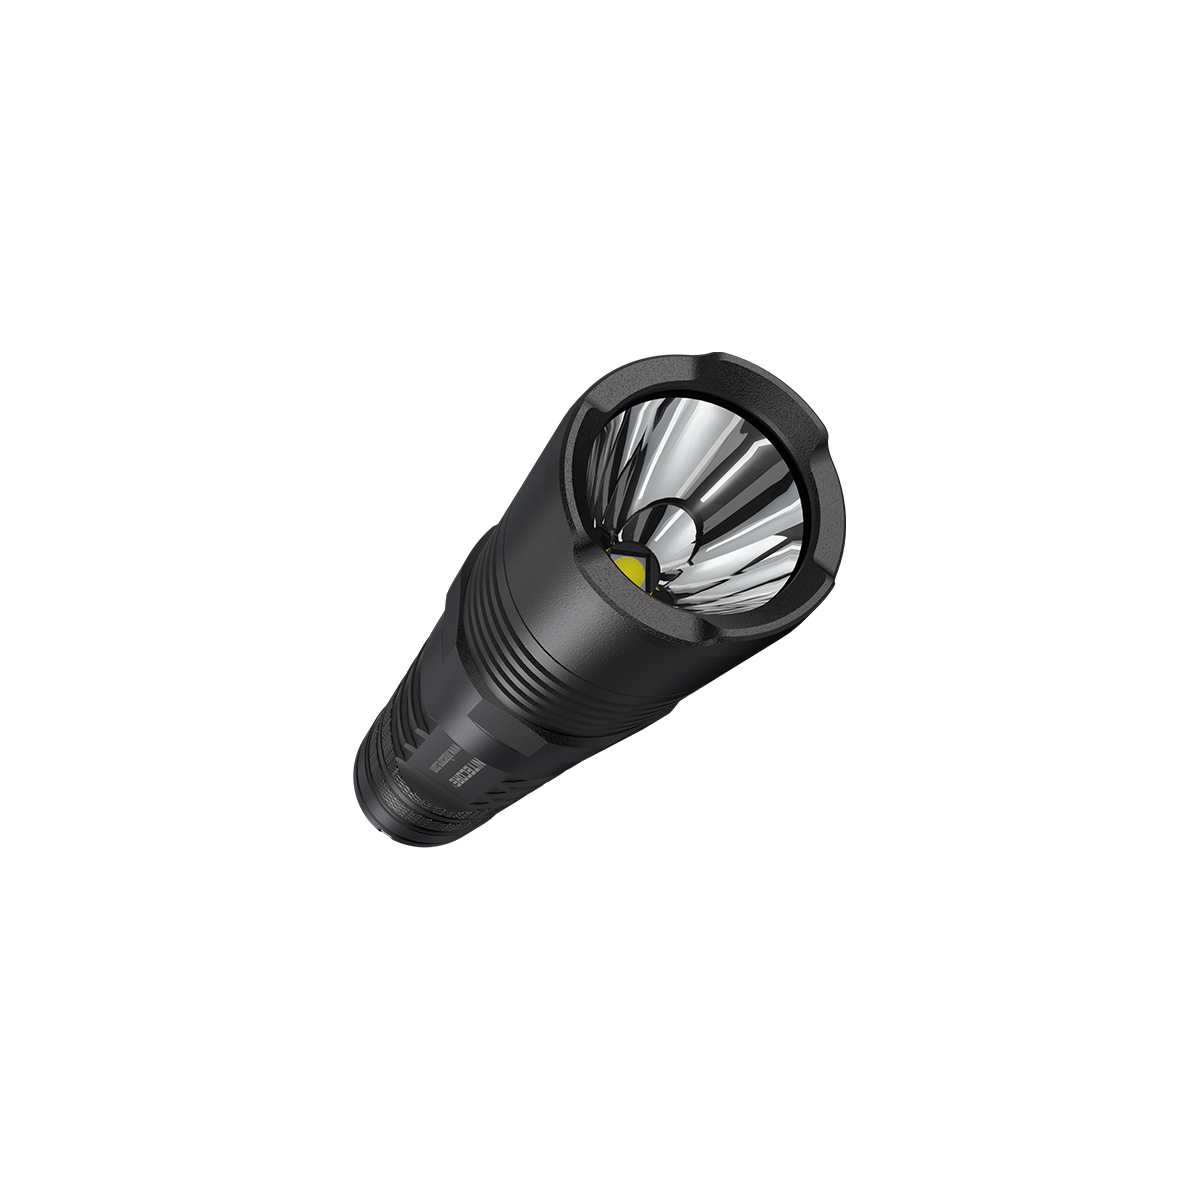 Nitecore P10 v2 tactical flashlight review